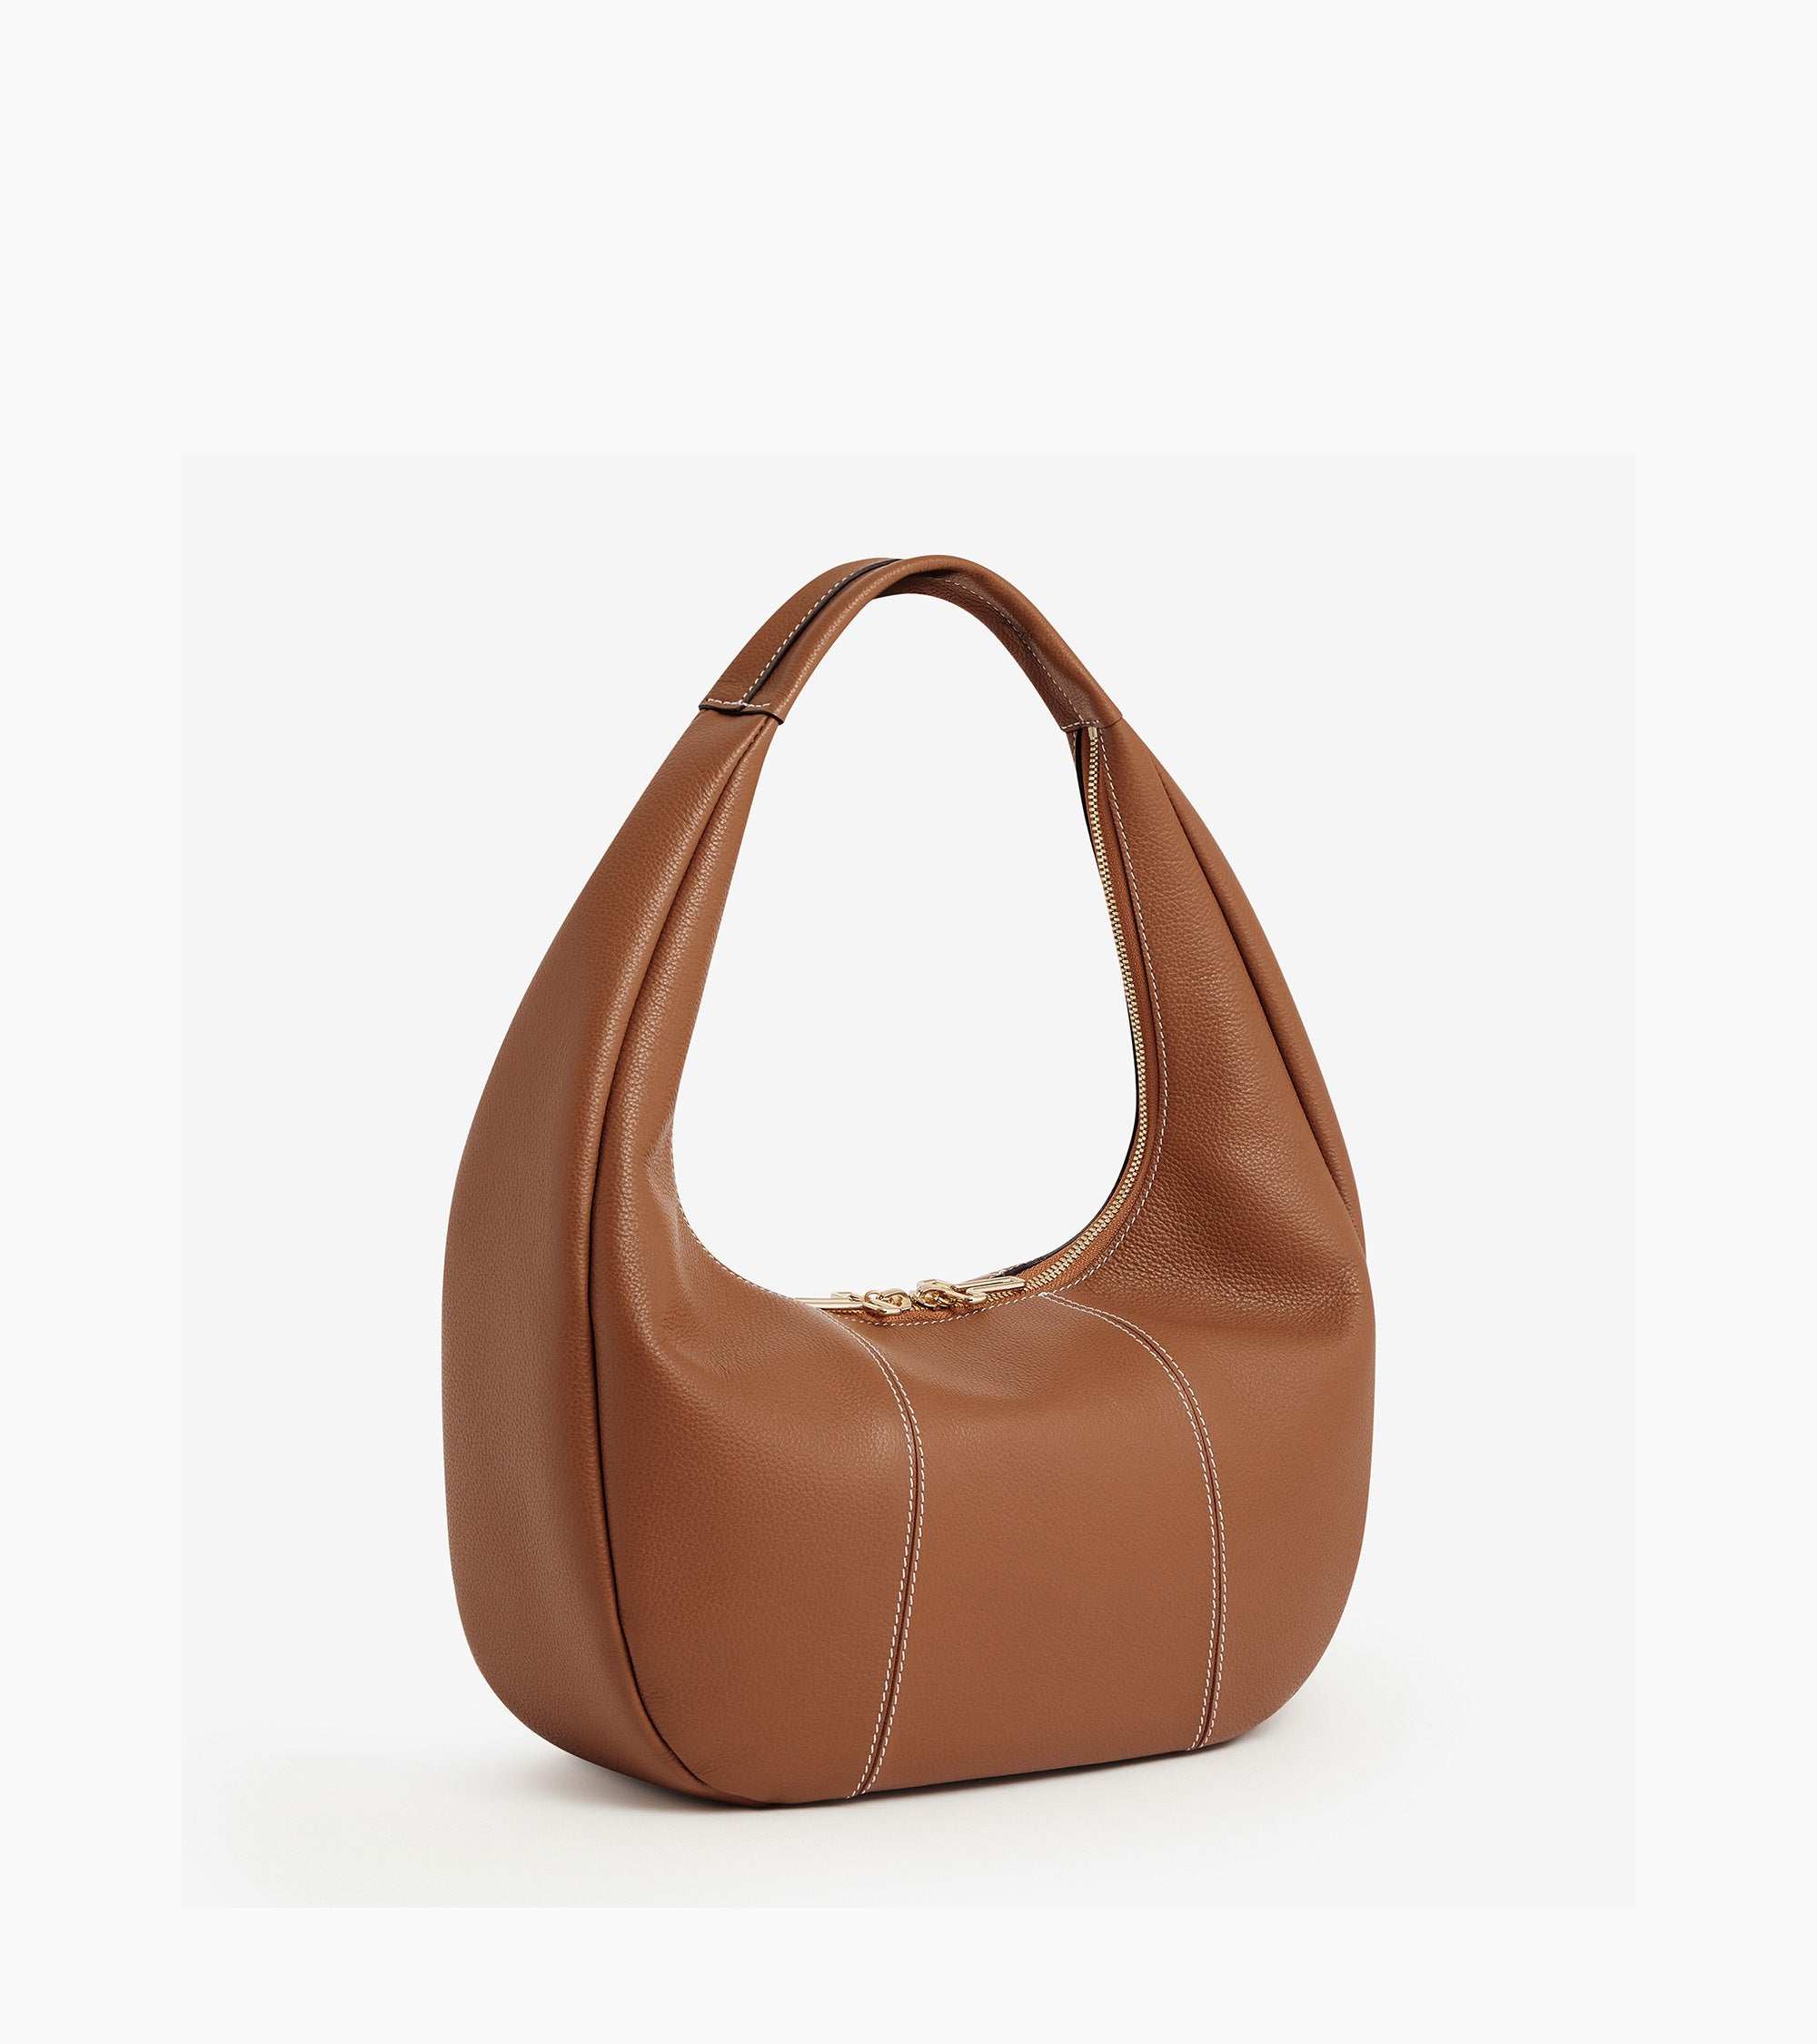 Juliette large grained leather hobo bag